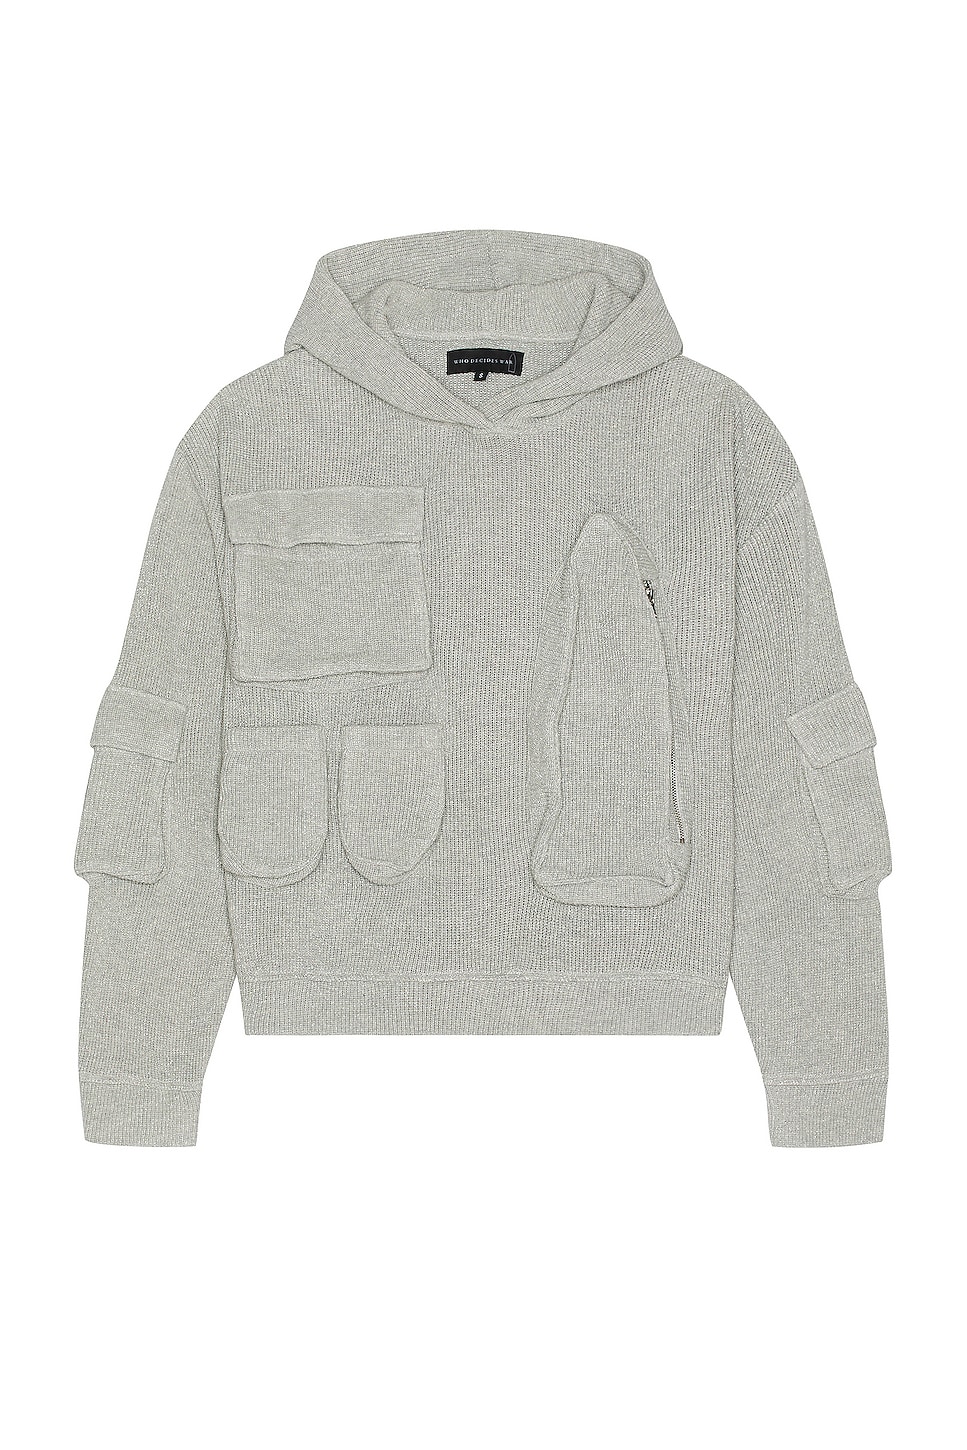 Multi Pocket Hooded Sweatshirt in Light Grey